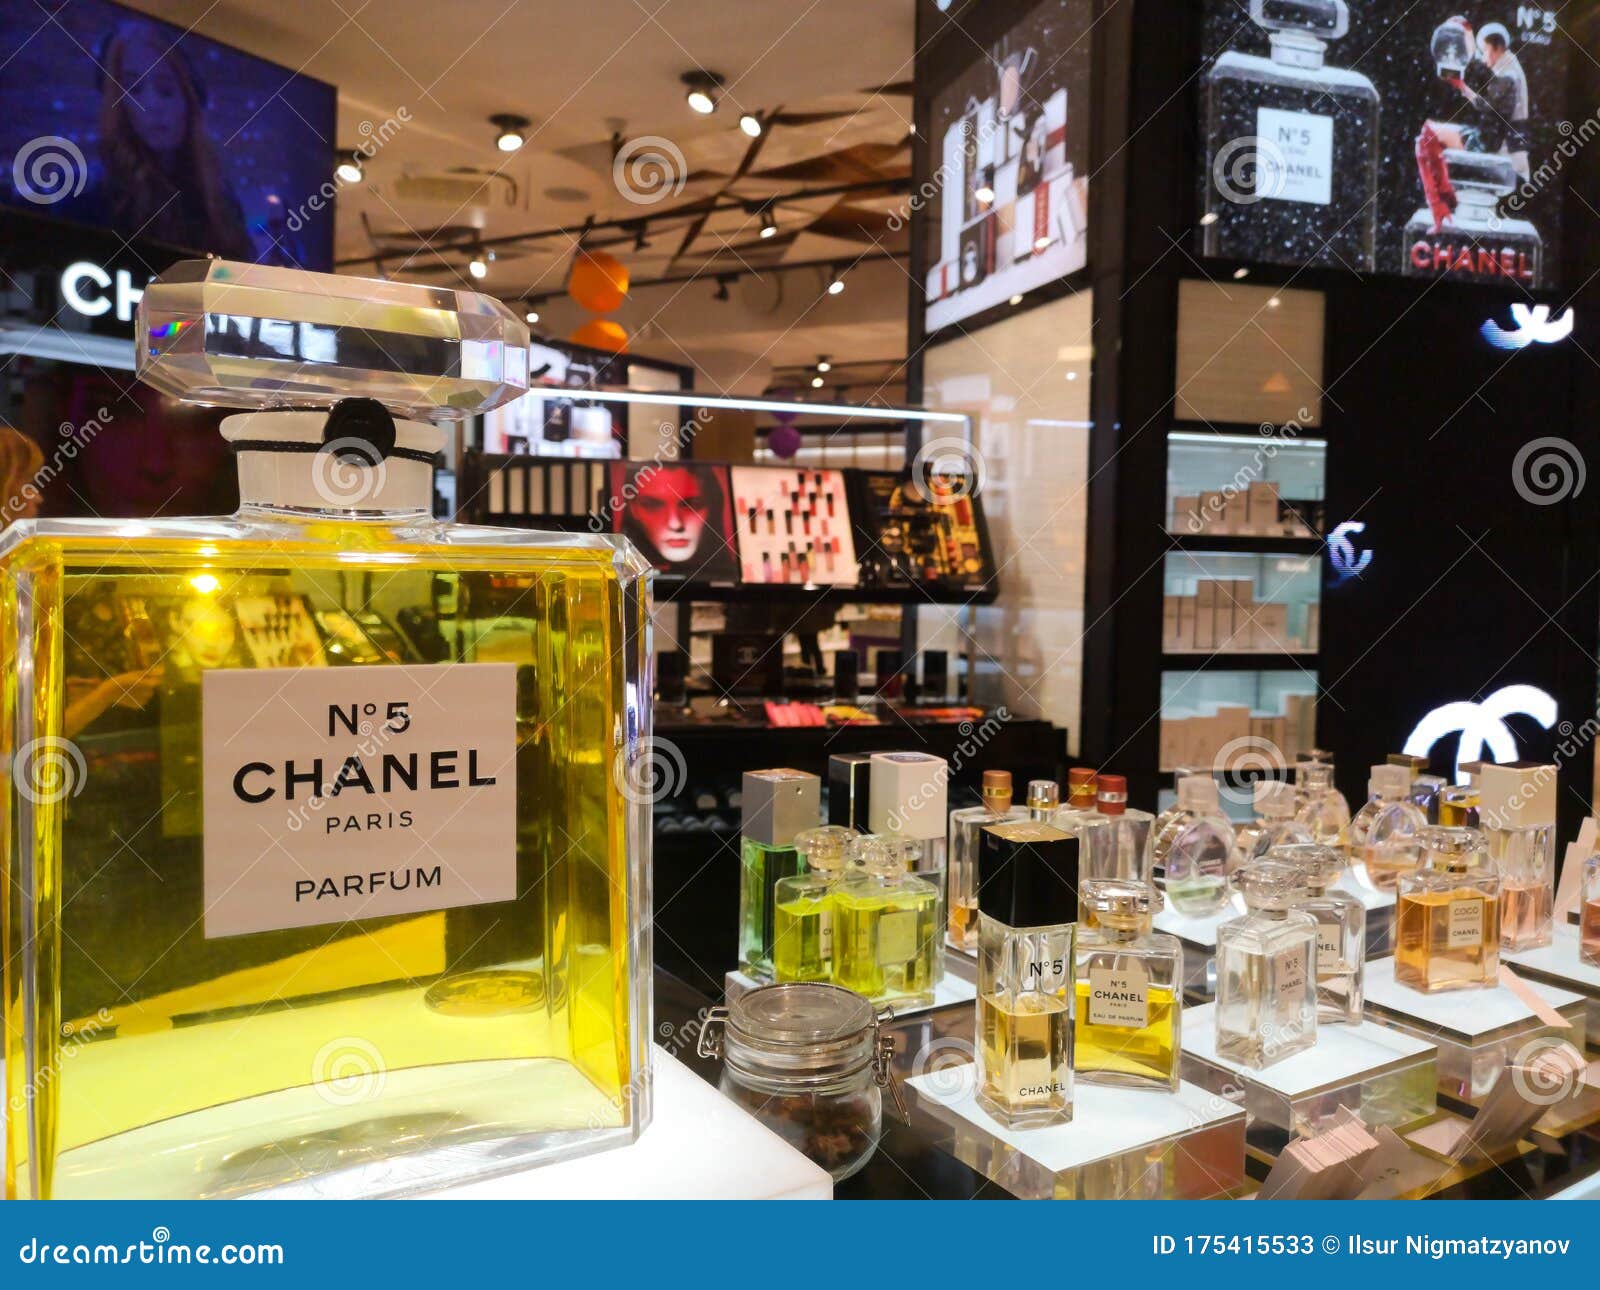 Chanel: perfume and cosmetics